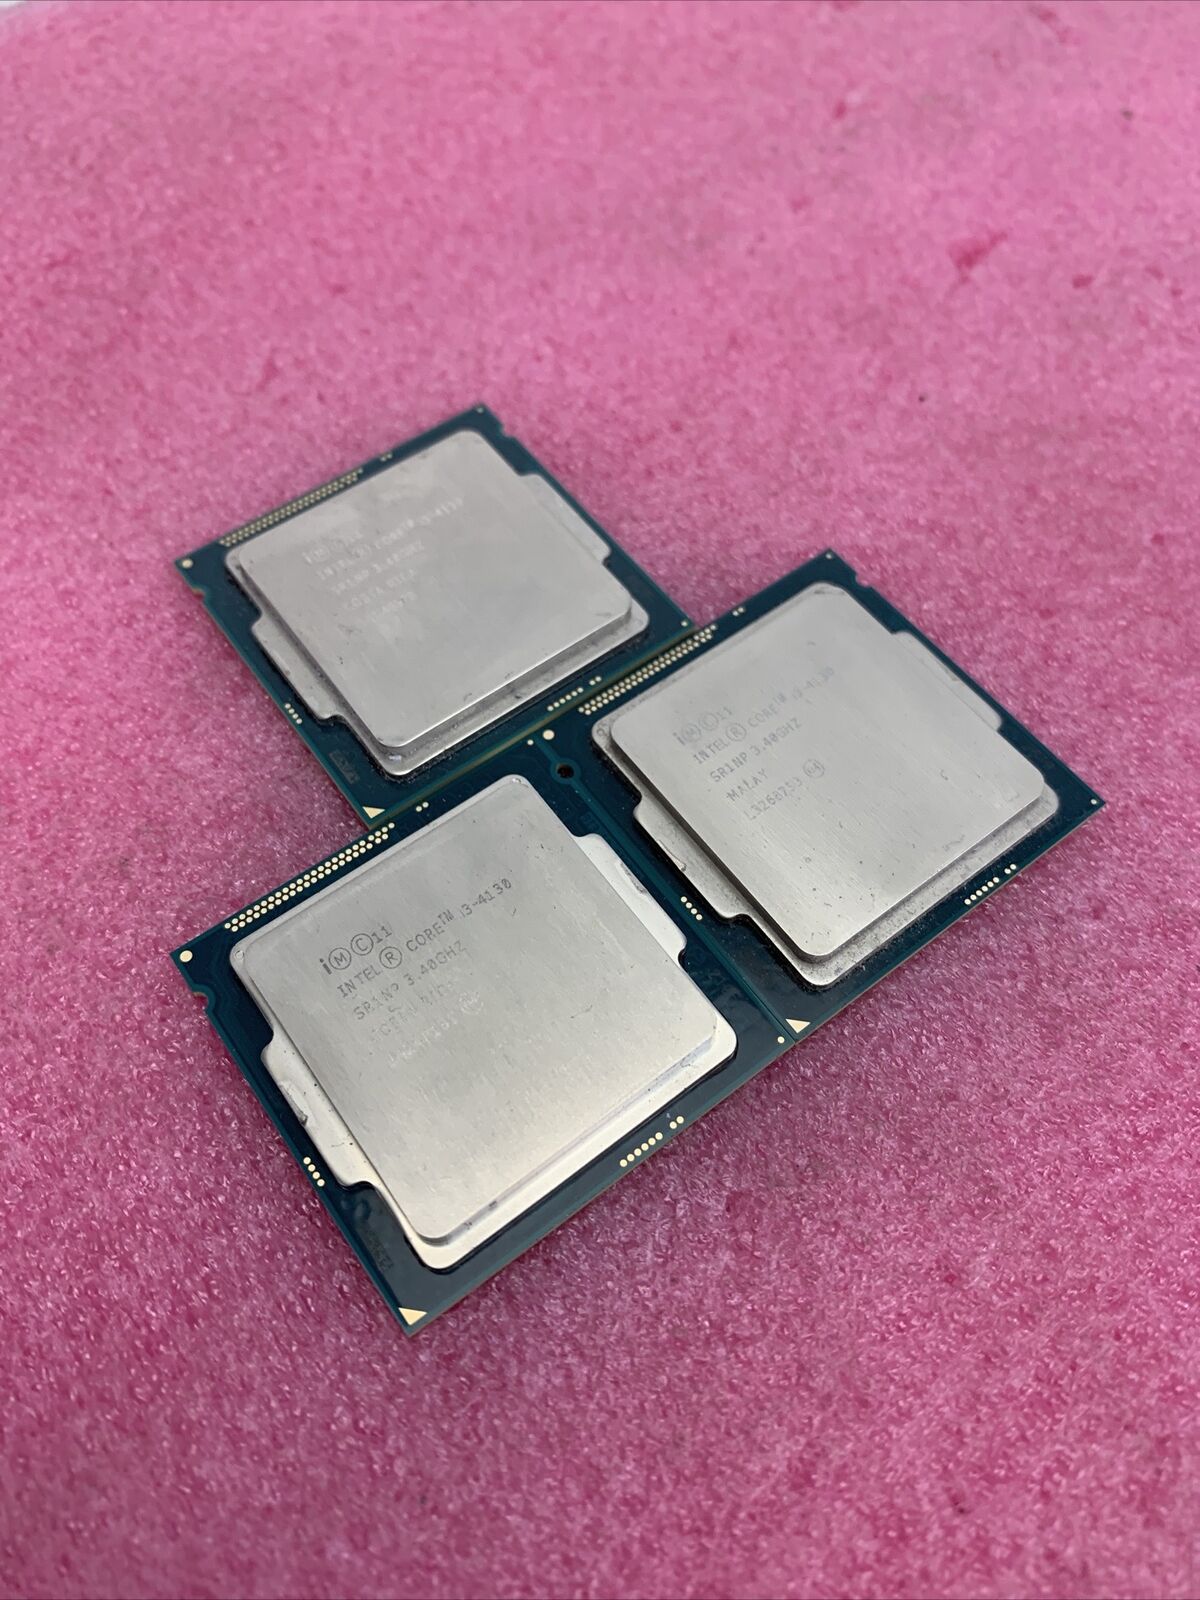 Lot of 3 Intel Core i3-4130 3.4GHz Processor